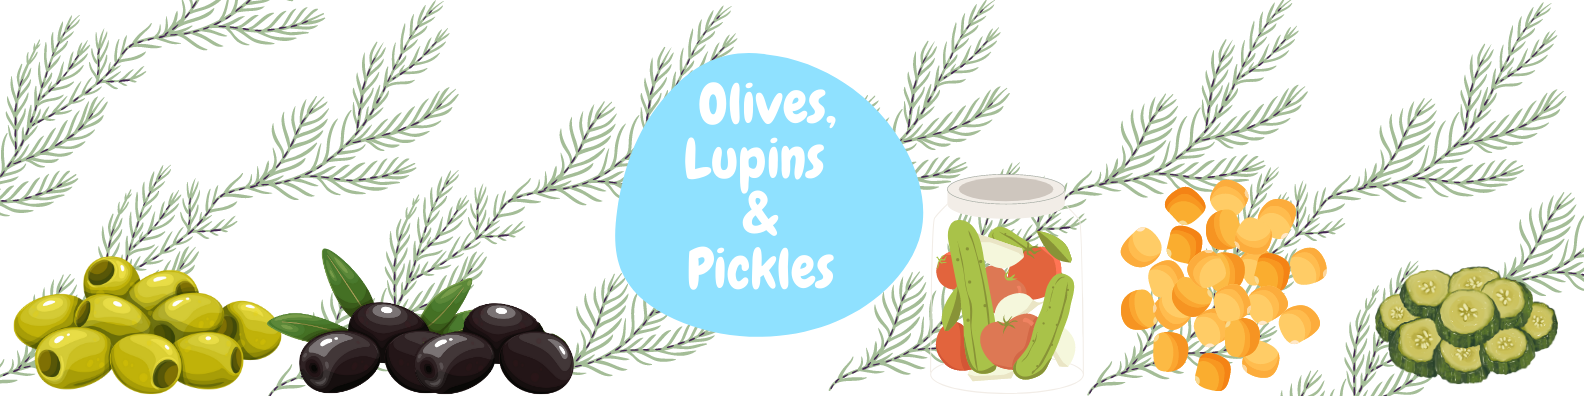 Olives Lupins & Pickles